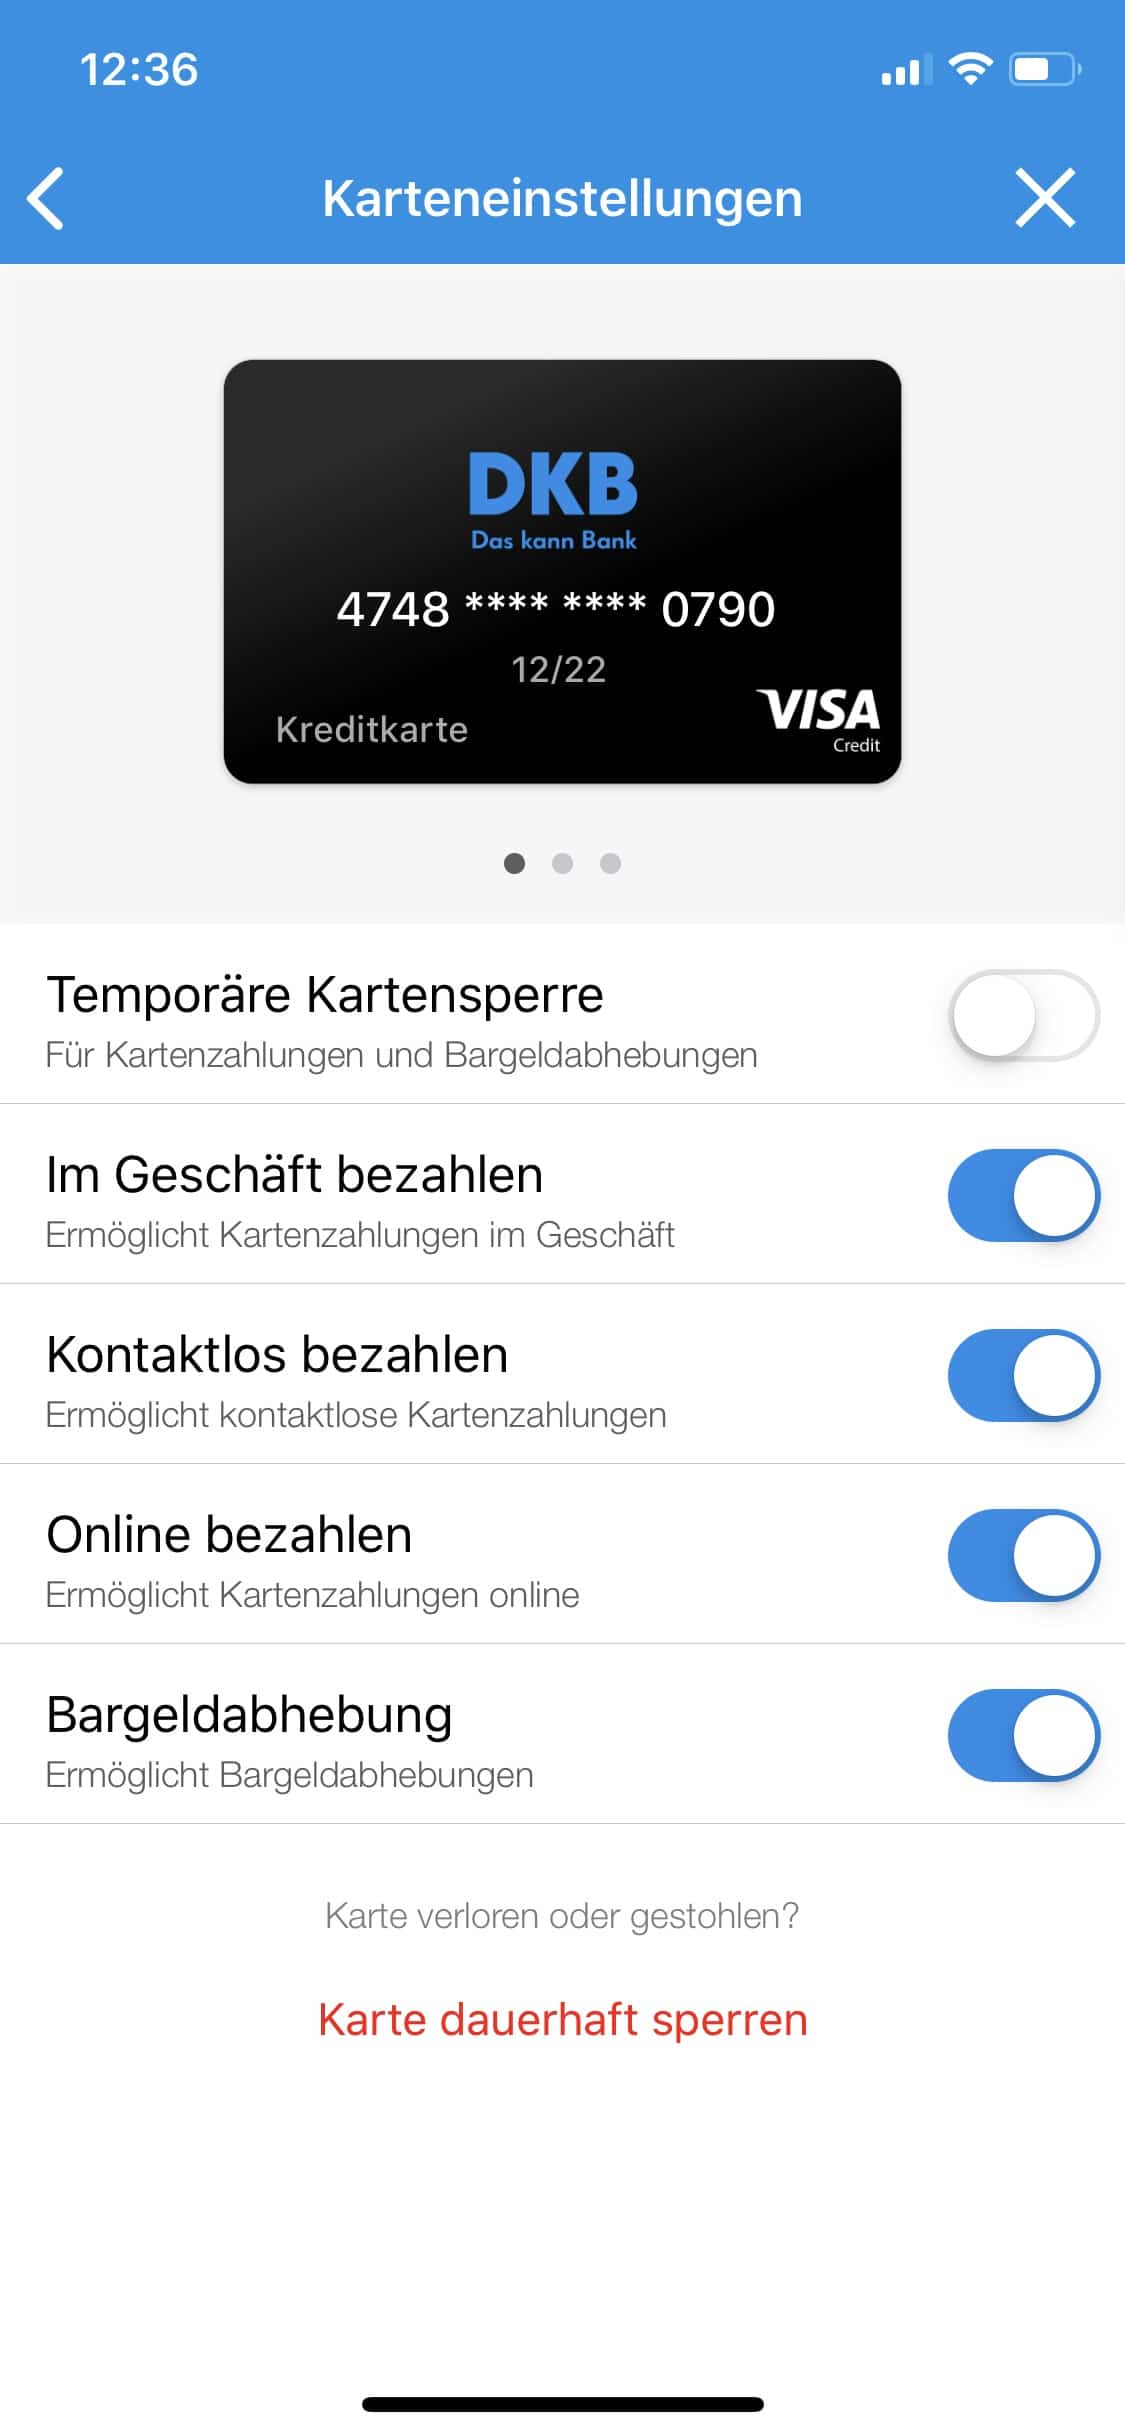 Apple iPhone - DKB-Banking-App - Card Control - Karteneinstellung